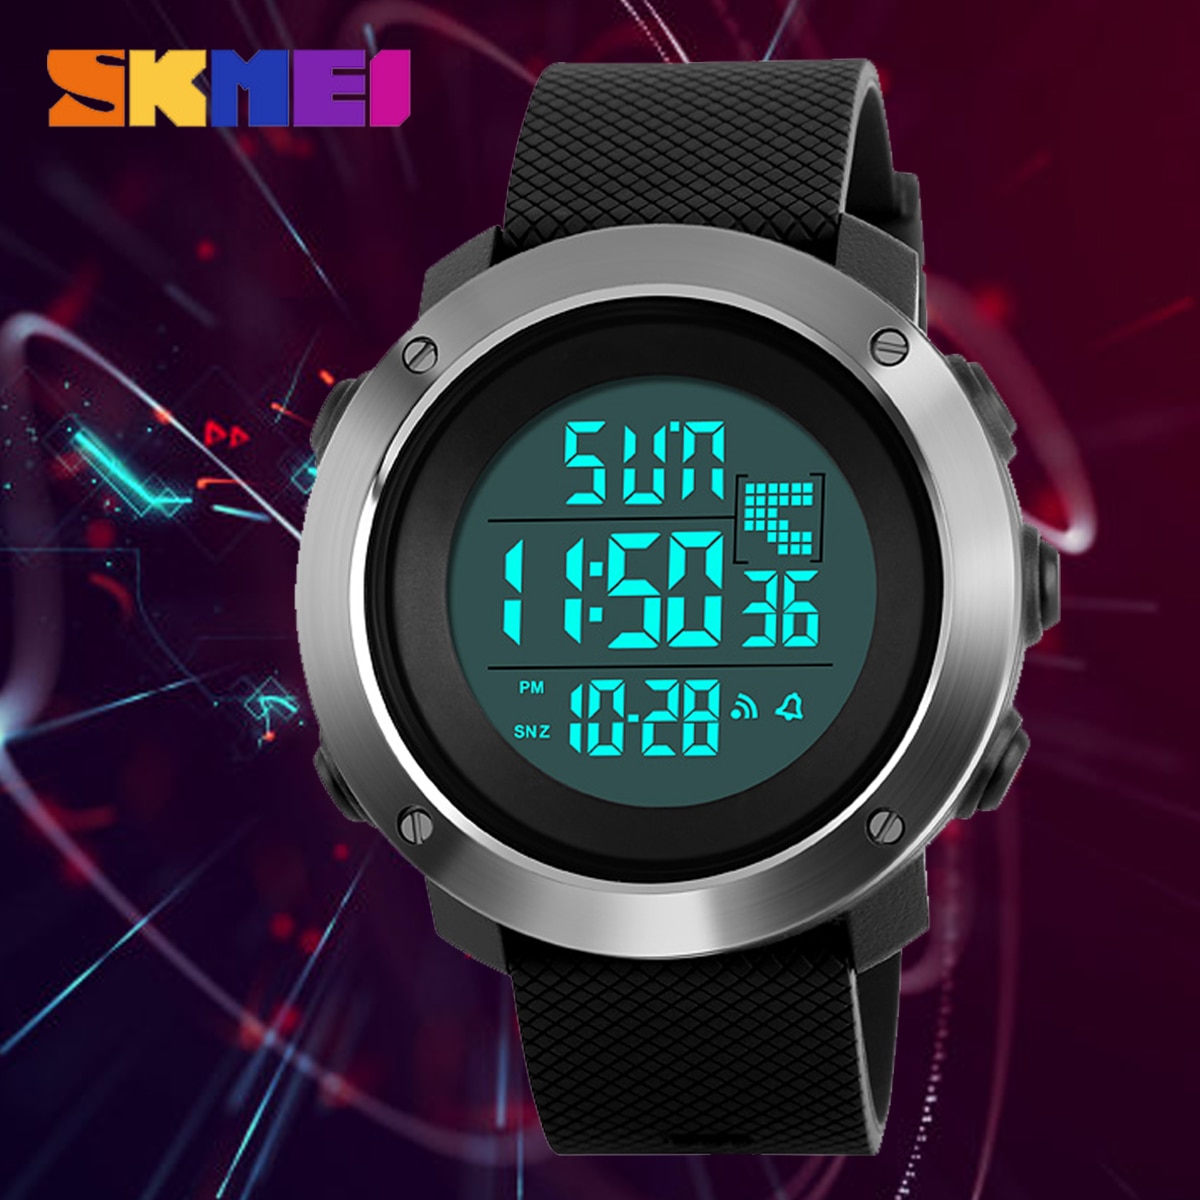 Skmei Mode Mannen Sport Horloges Chrono Dubbele Tijd Digitale Horloges Heren Digitale LED Elektronische Klok Man Relogio Masculino